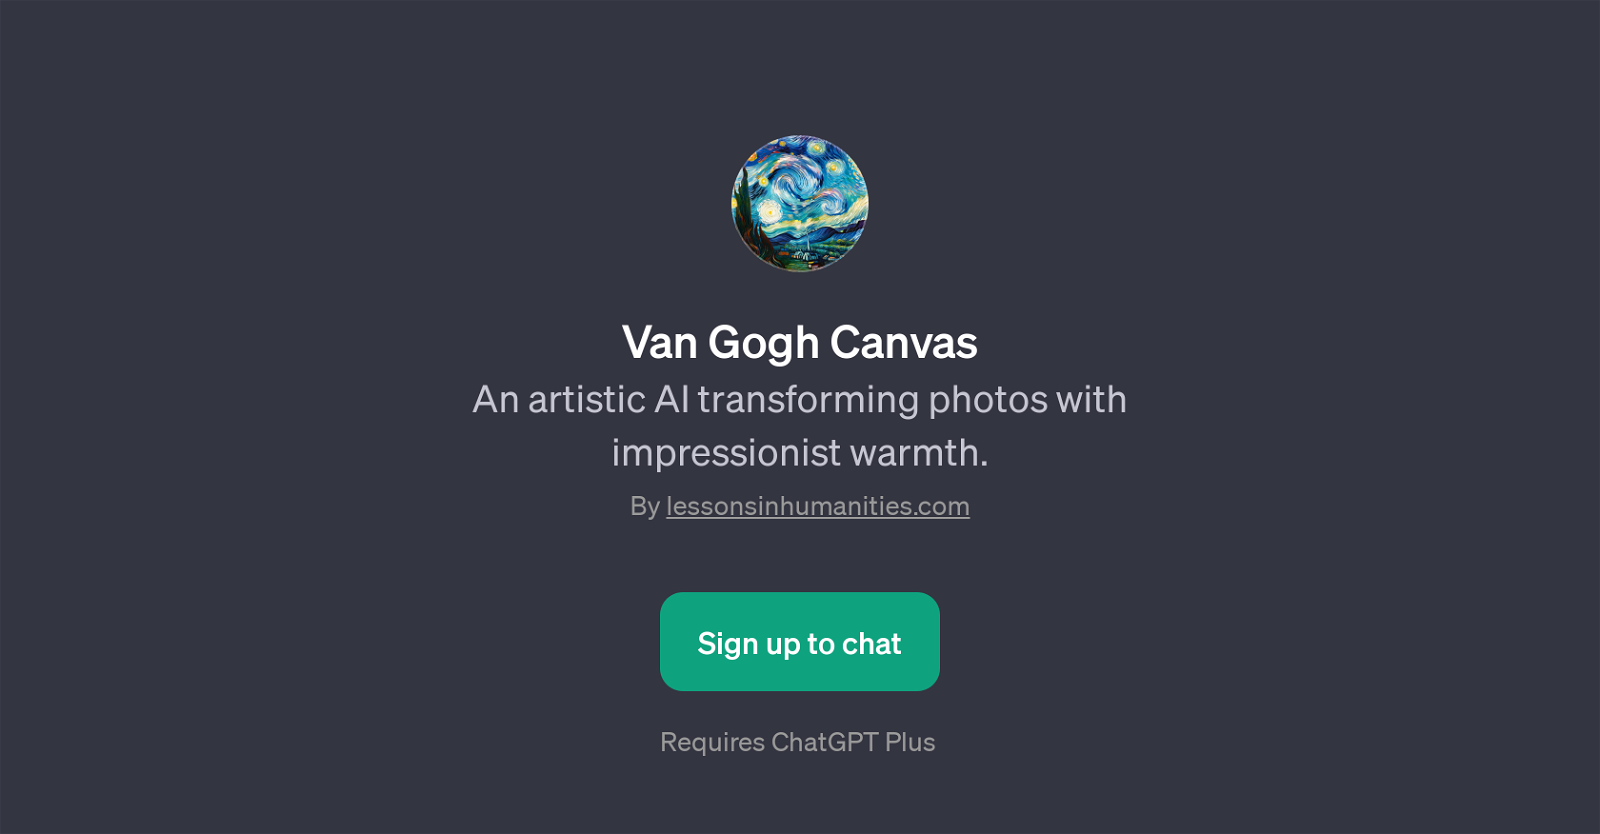 Van Gogh Canvas website